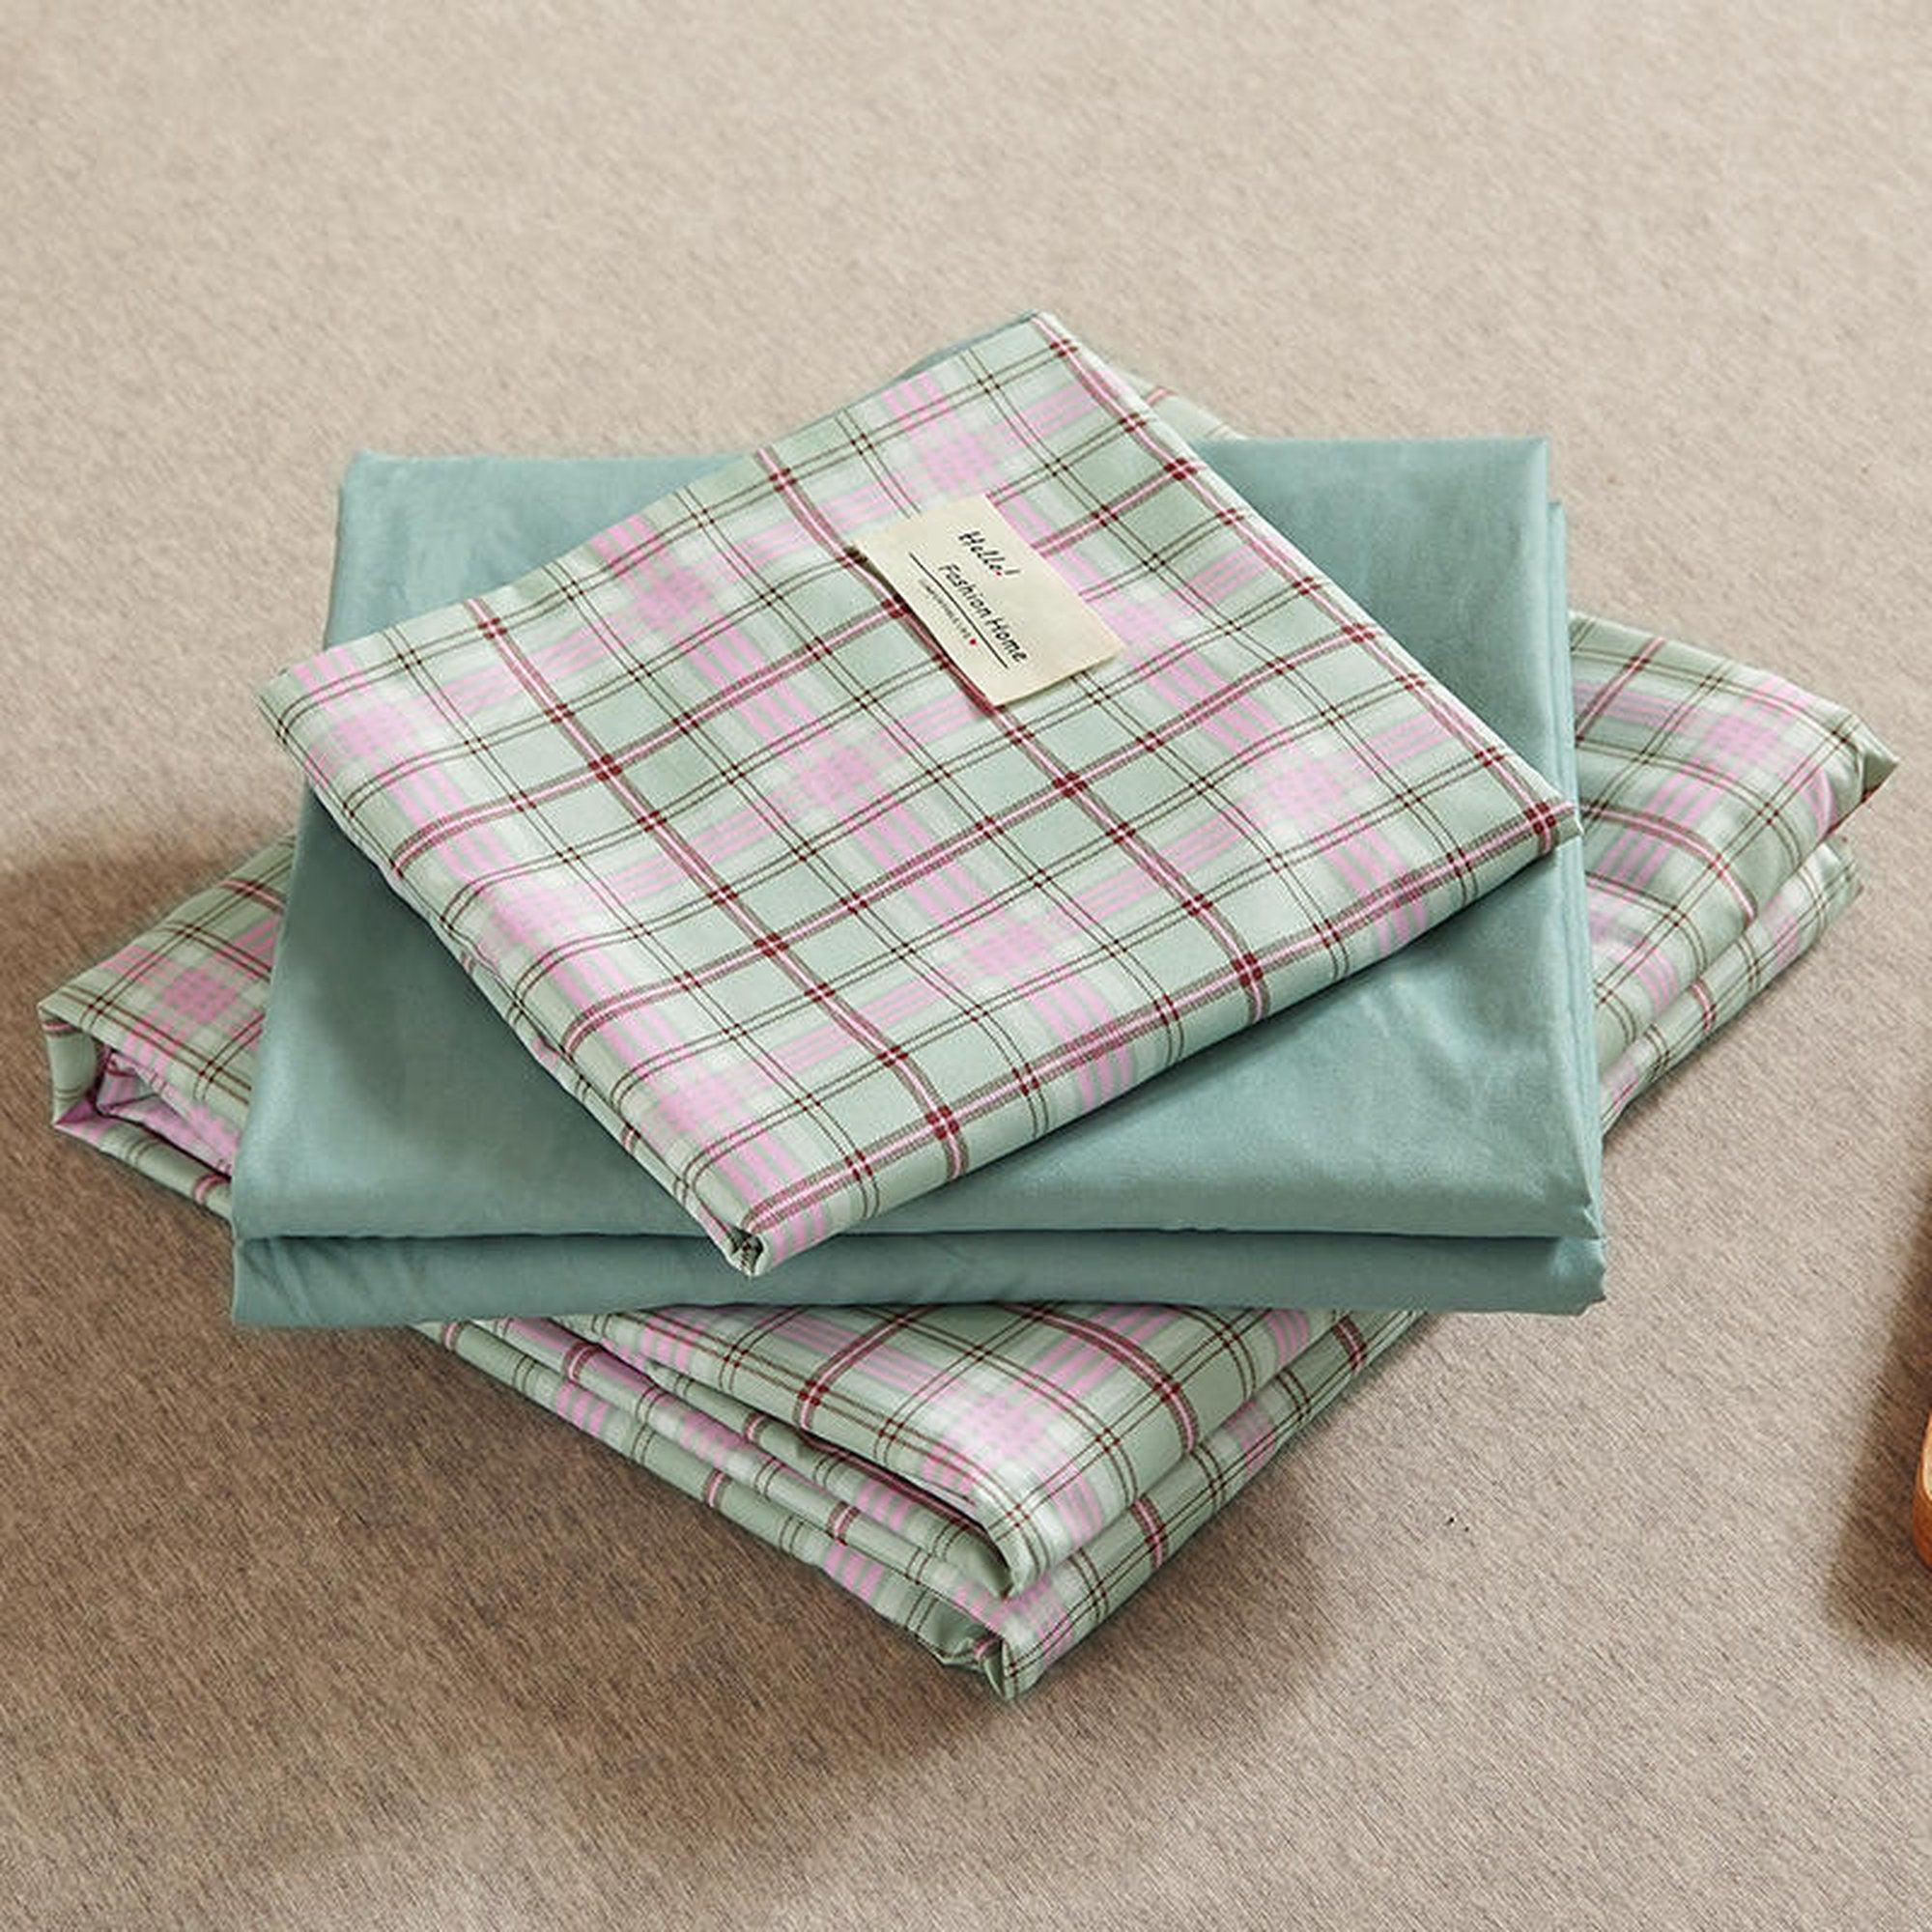 daintyduvet Buffalo Plaid Duvet Cover Set Green Pink Plaid Bedding Set Mattress Cover Checkered Pastel Bedding